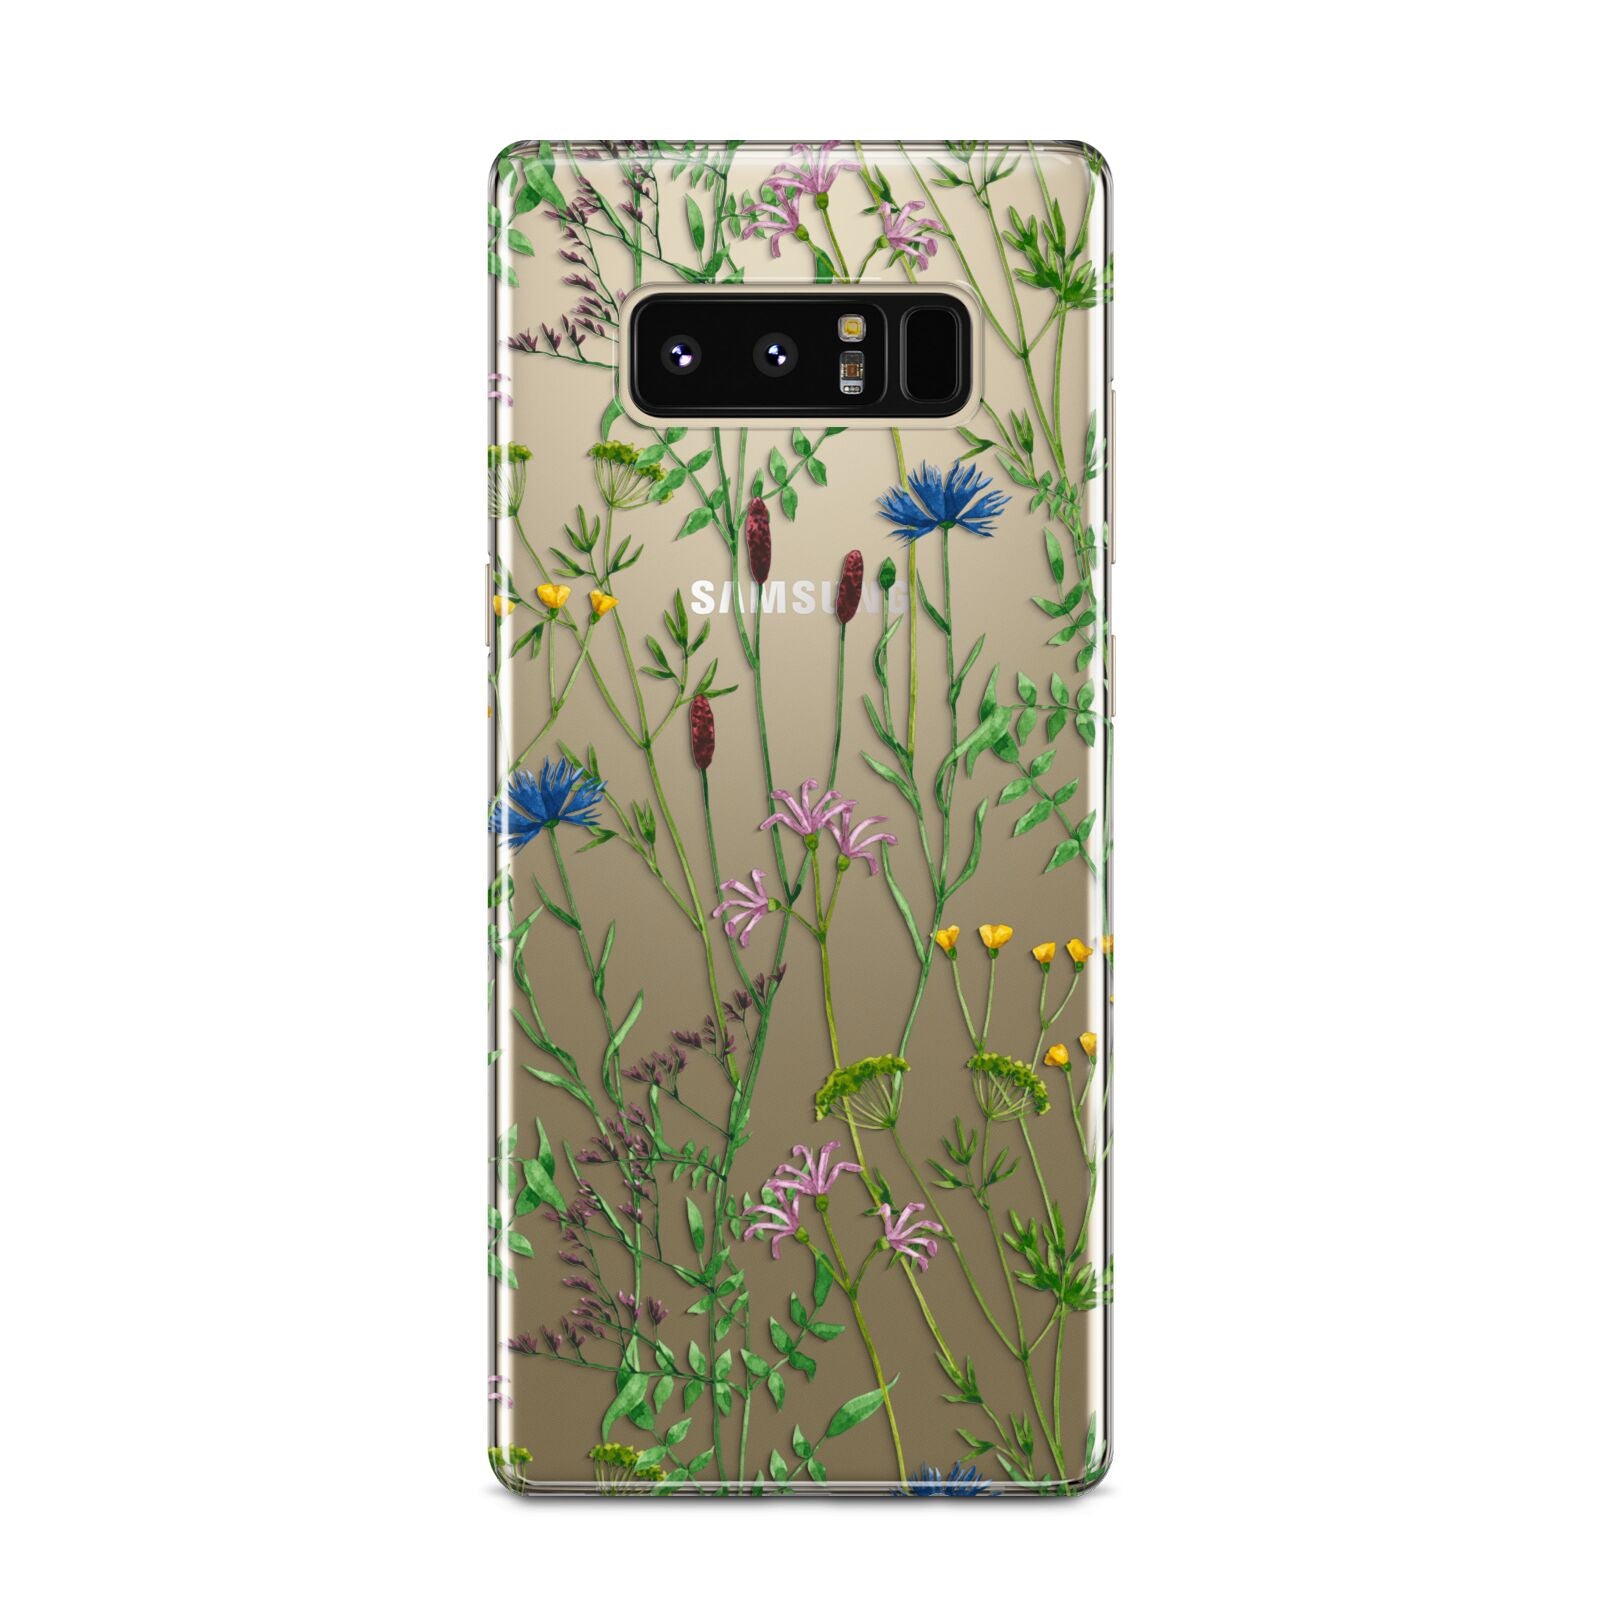 Wildflowers Samsung Galaxy Note 8 Case